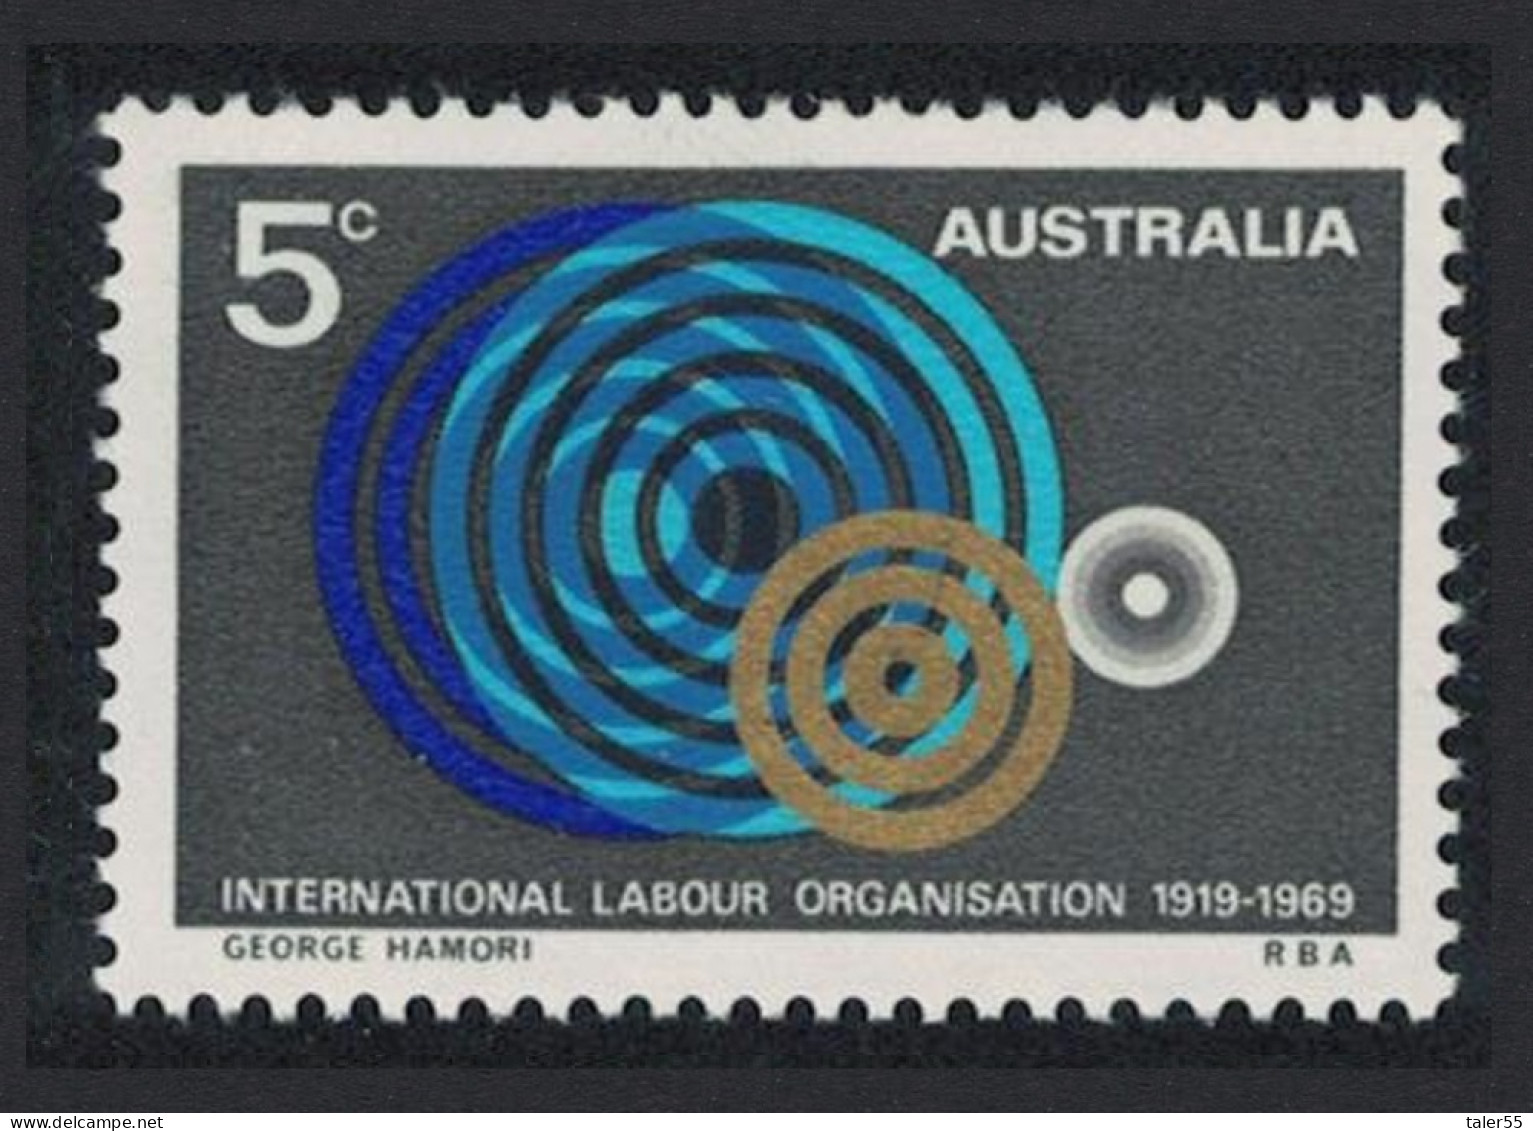 Australia ILO 1969 MNH SG#439 - Mint Stamps